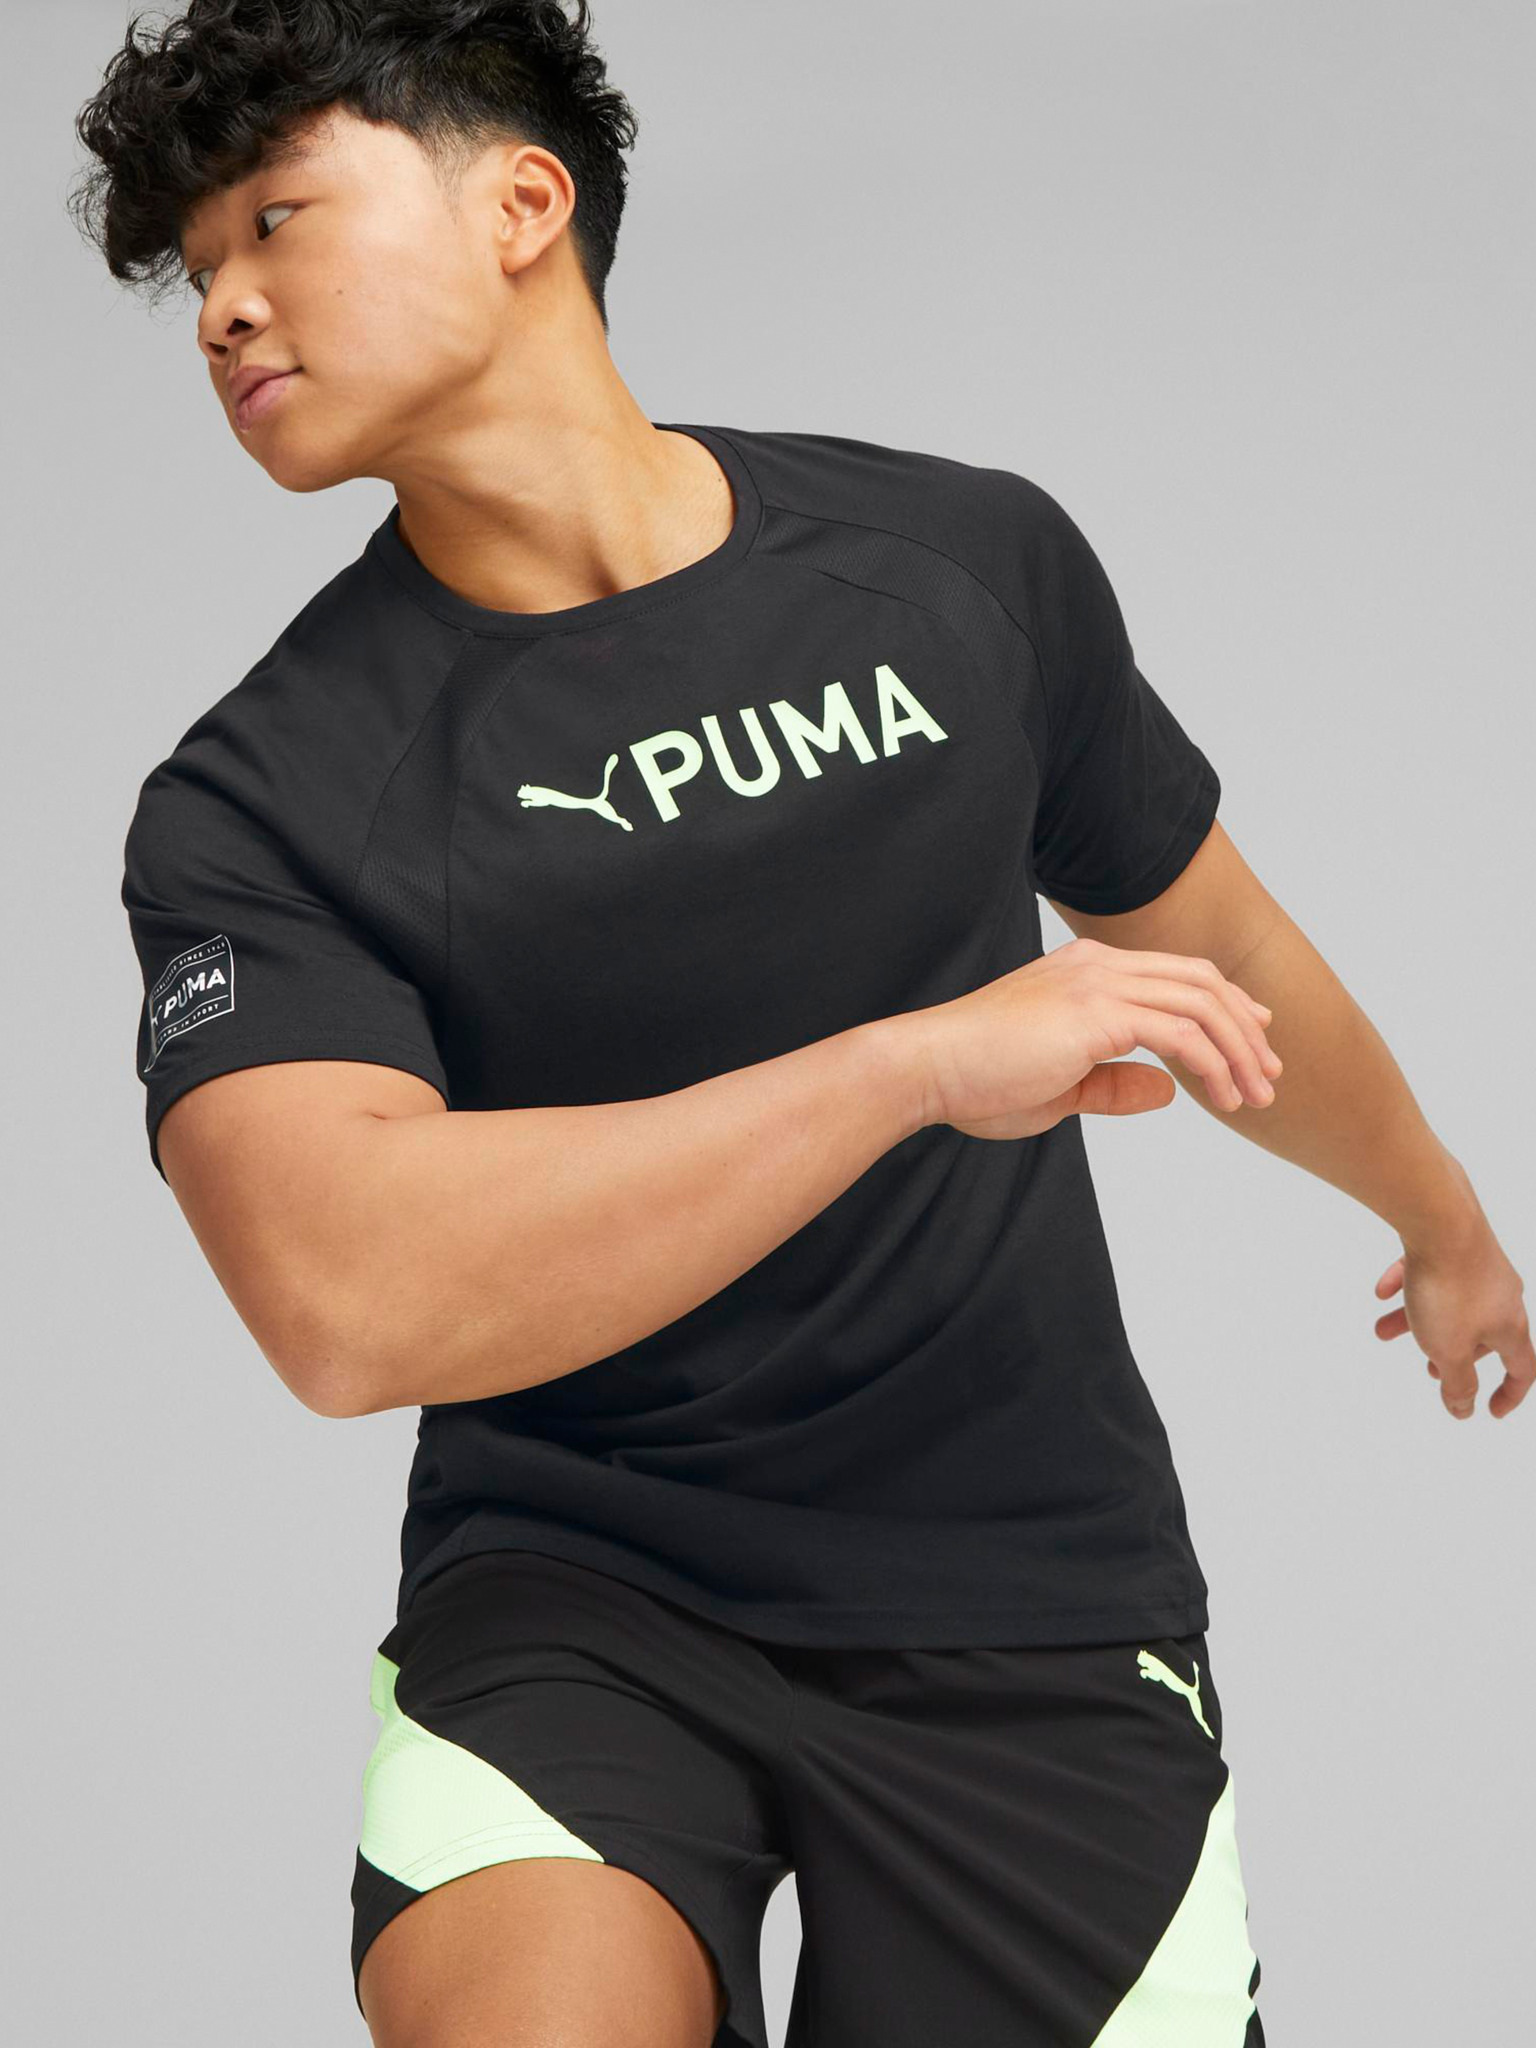 Triblend Fit - Ultrabreathe T-shirt Puma